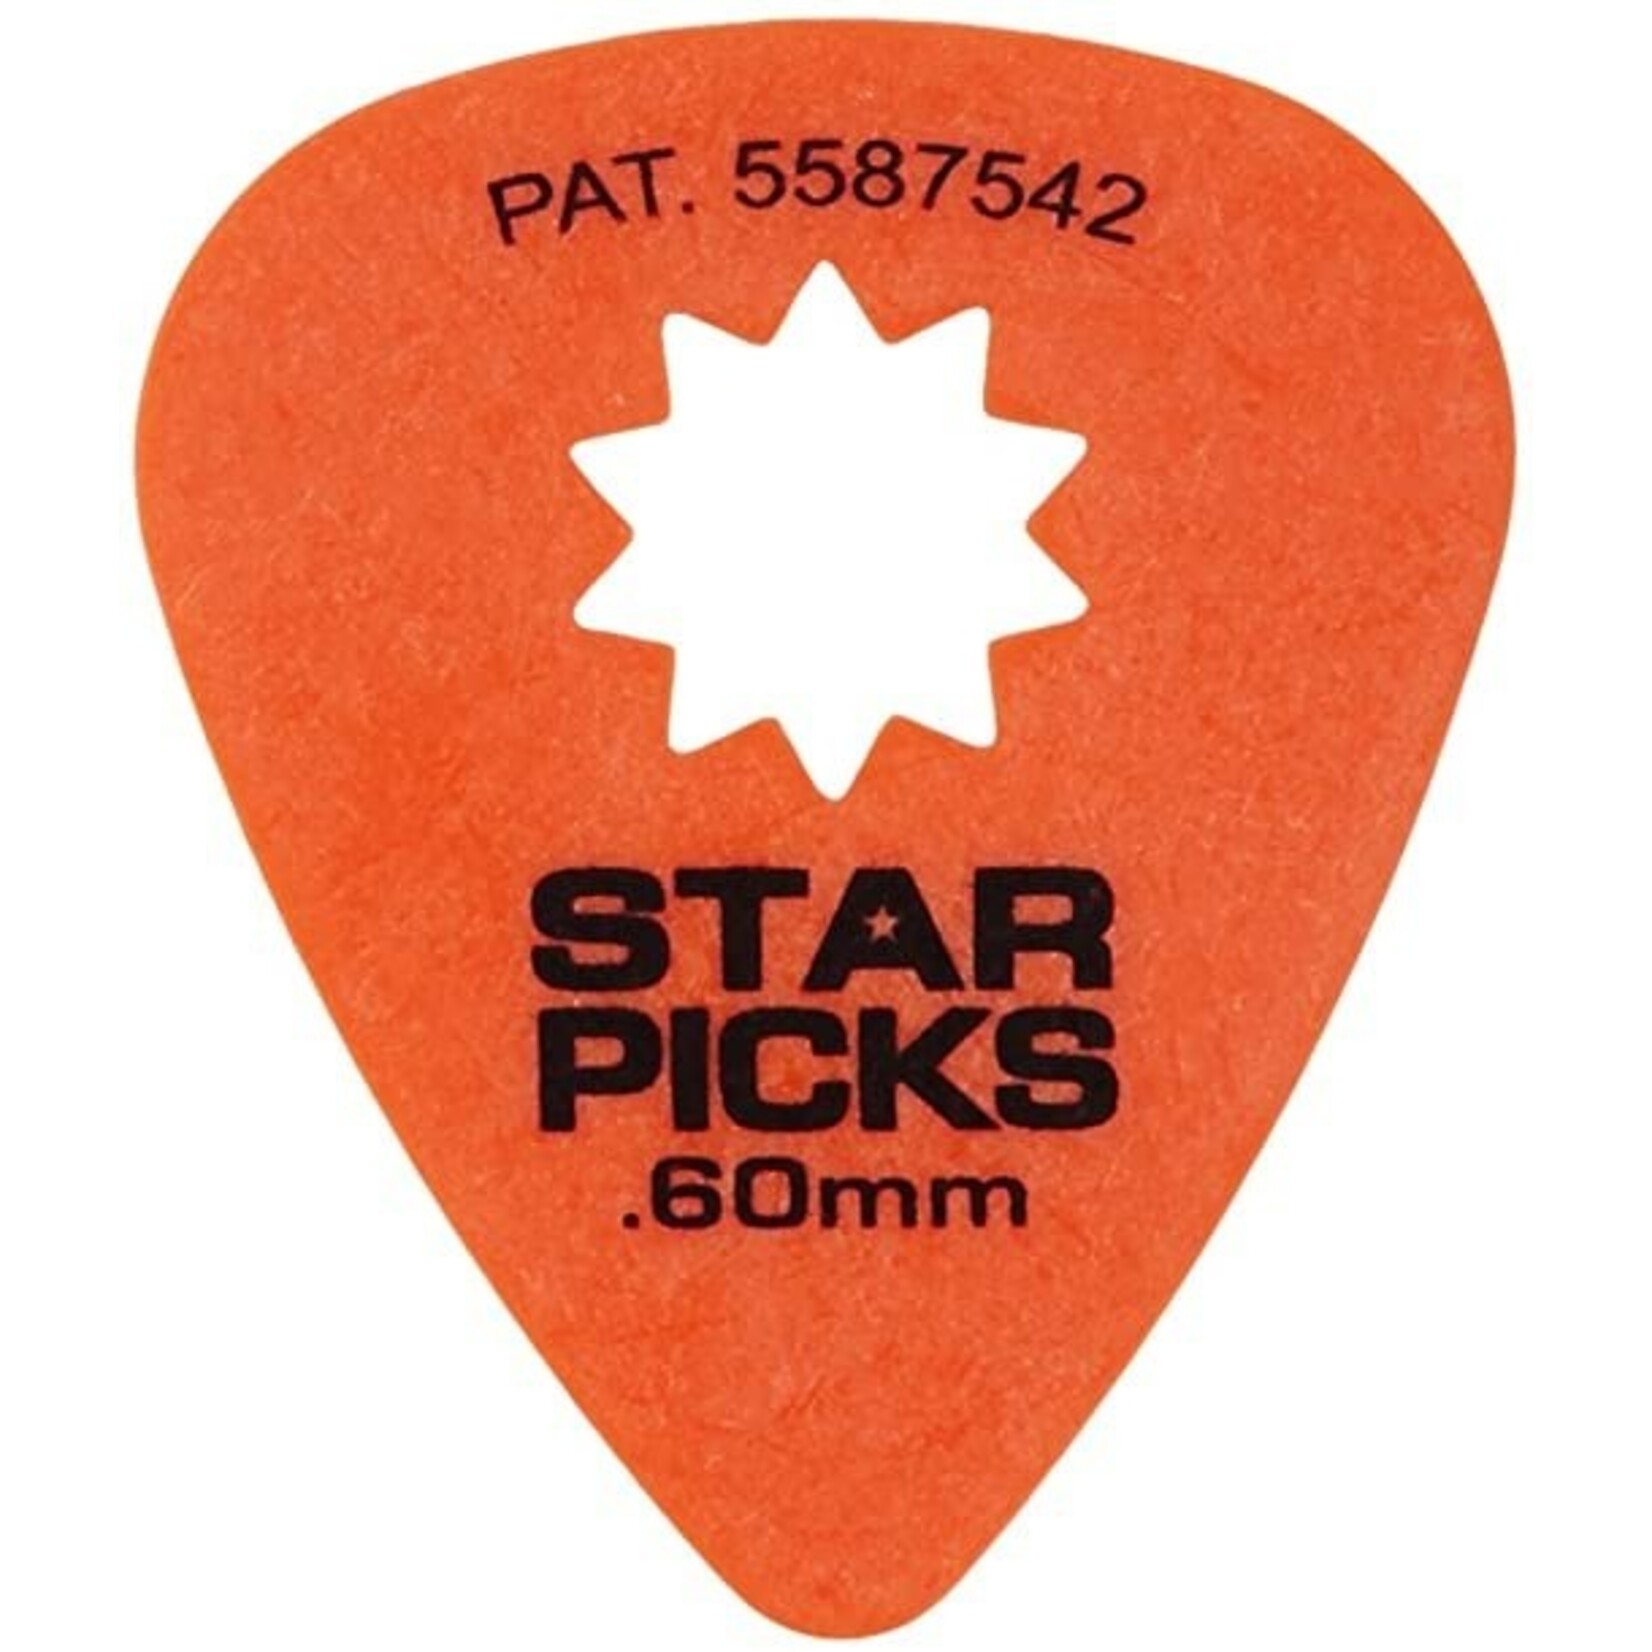 Star Picks .60mm Guitar Picks 12 Pack - Orange